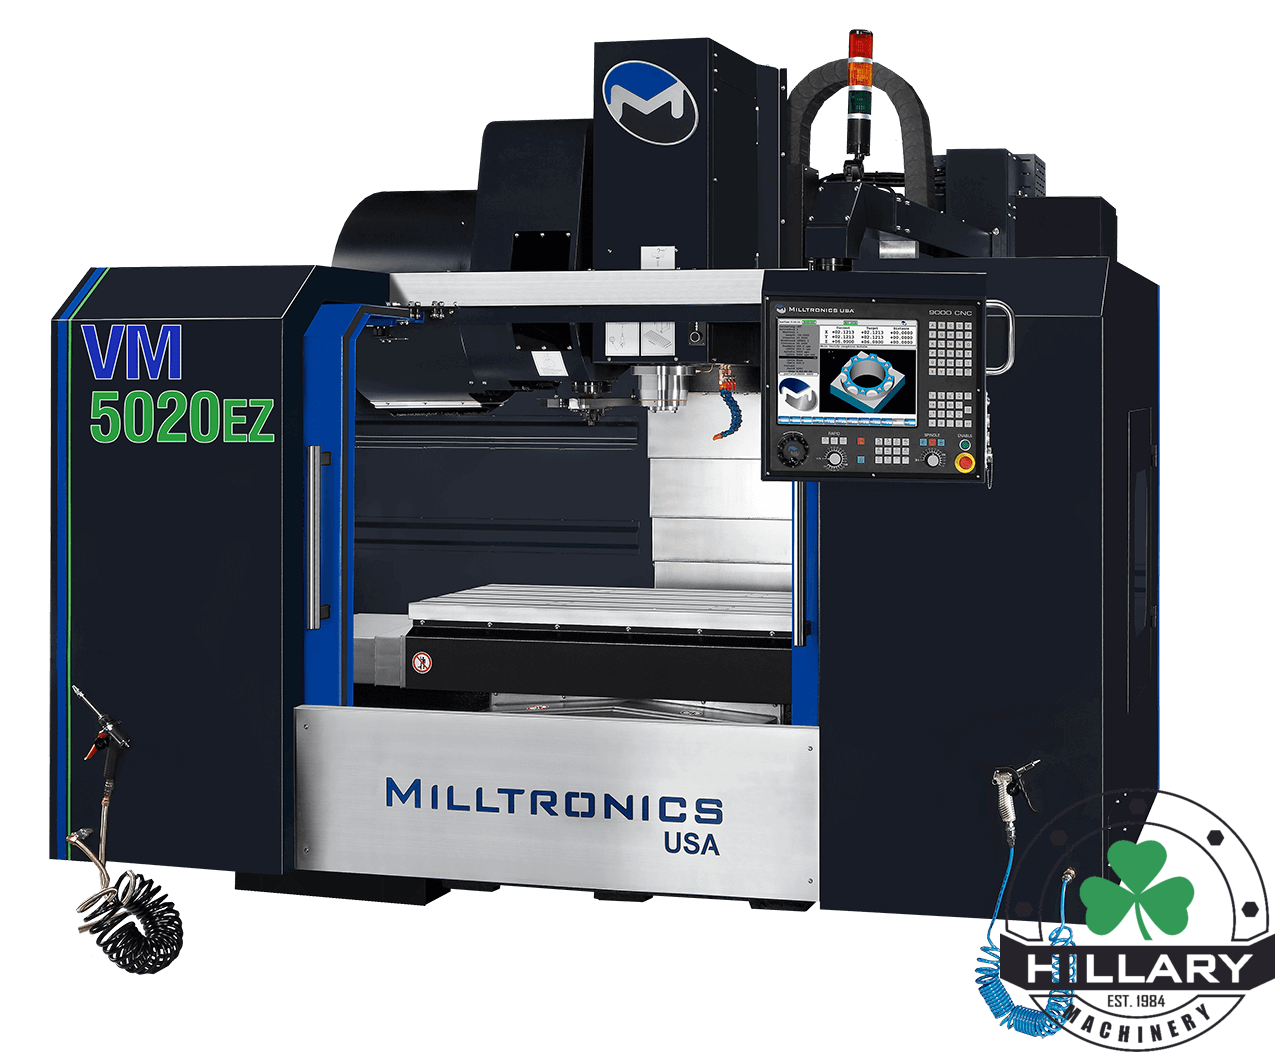 MILLTRONICS CNC VM5020EZ Vertical Machining Centers | Hillary Machinery